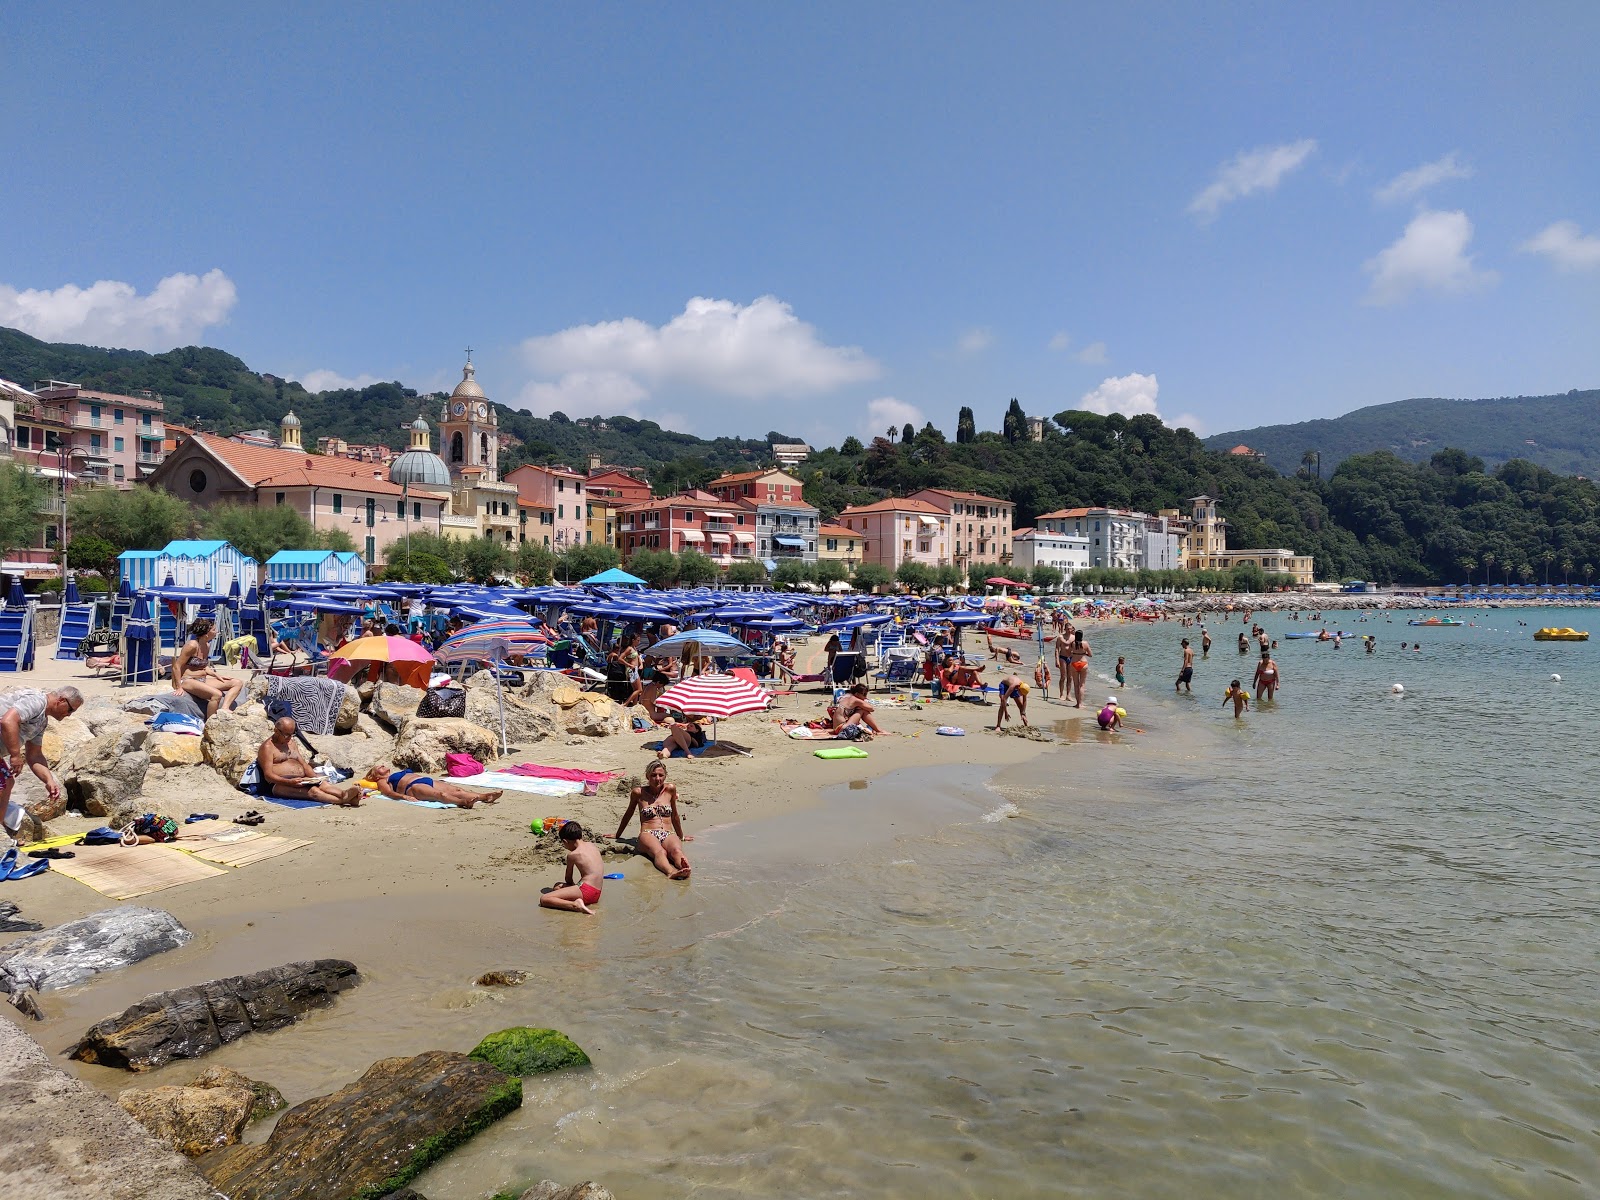 Foto de Spiaggia di San Terenzo con muy limpio nivel de limpieza